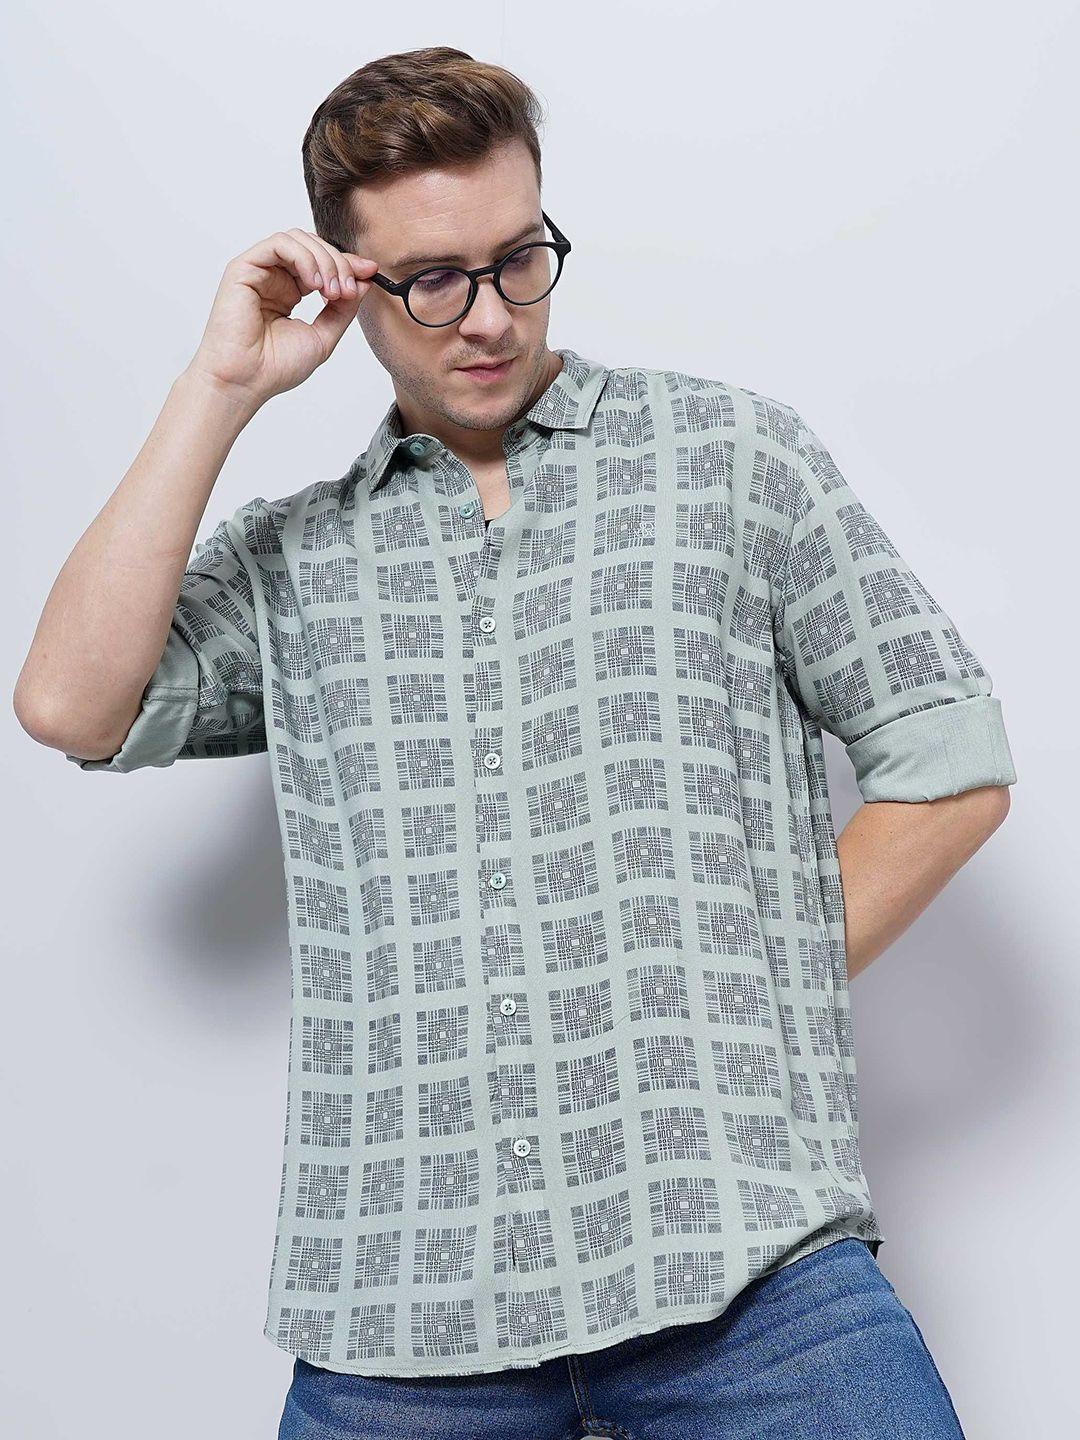 soratia-gemontric-printed-spread-collar-casual-cotton-shirt